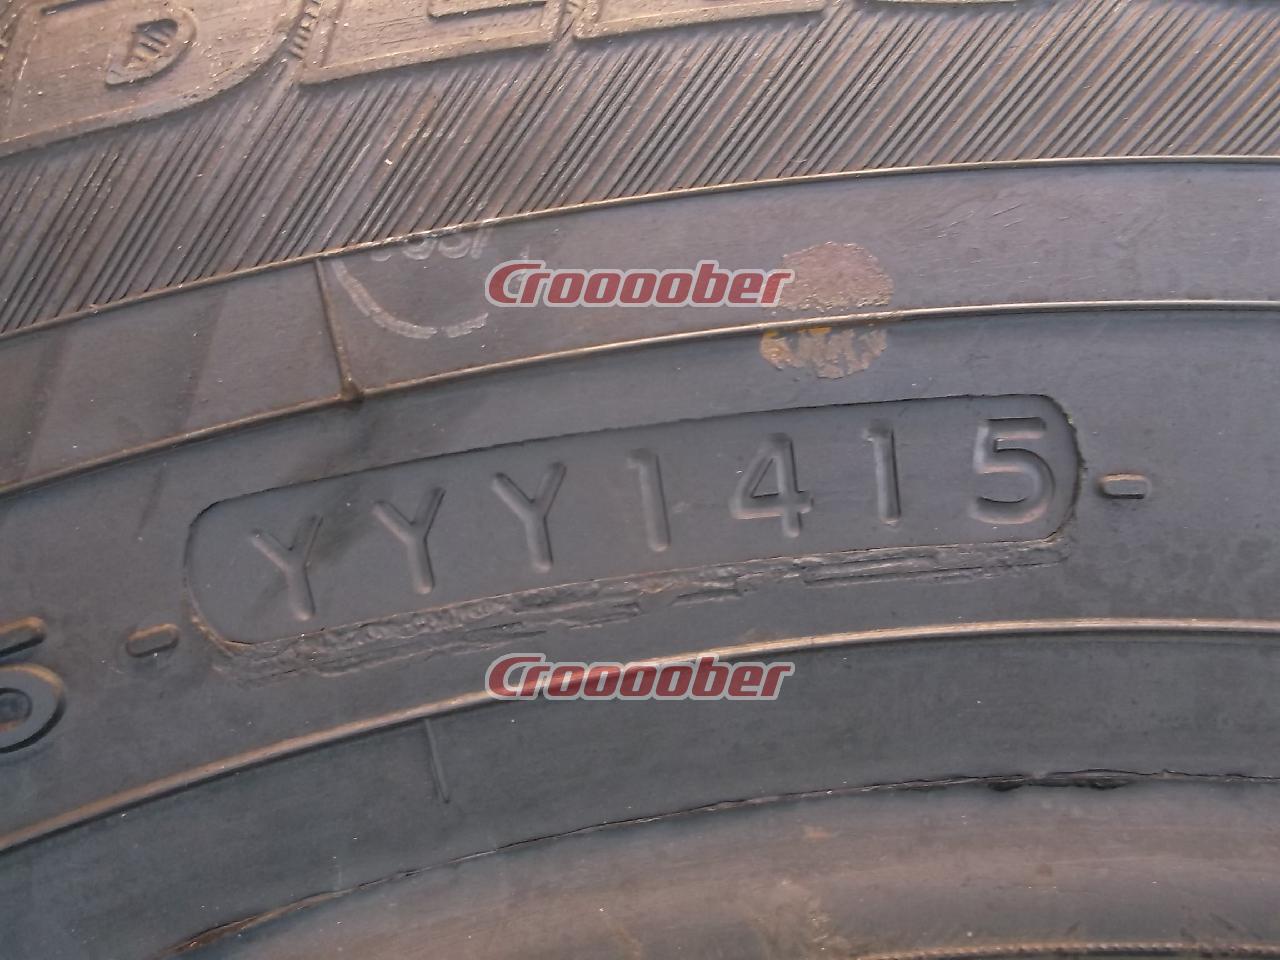 YOKOHAMA iceGUARD iG30 製造年違い | スタッドレスタイヤ 13インチスタッドレスタイヤパーツの通販なら |  Croooober(クルーバー)